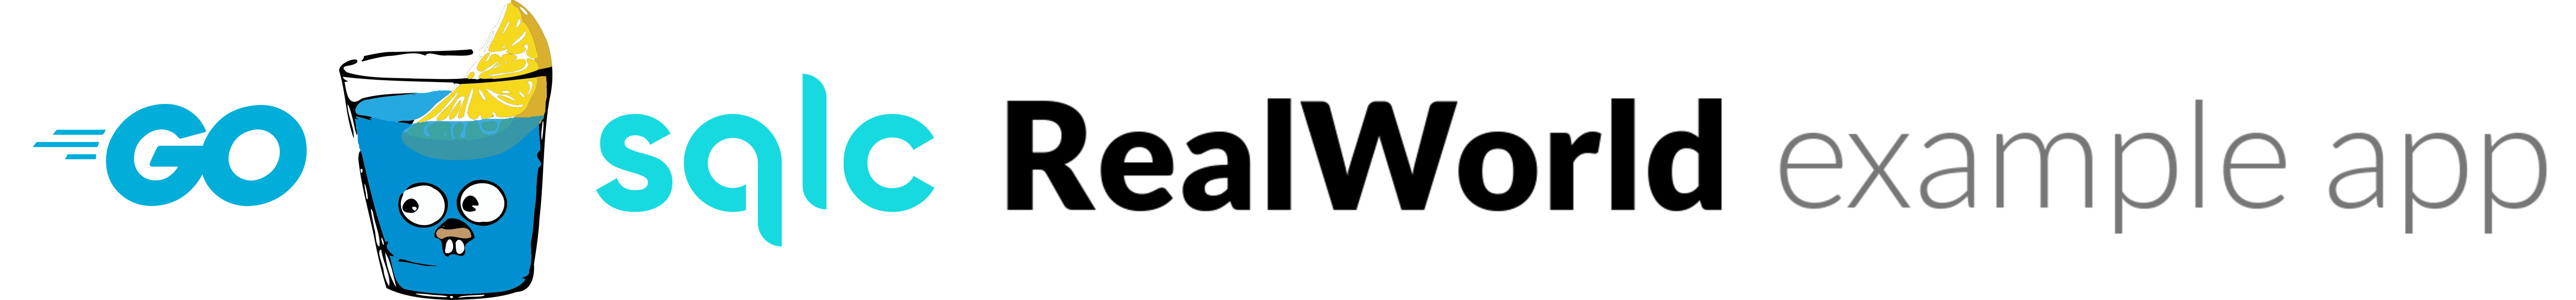 RealWorld Example App